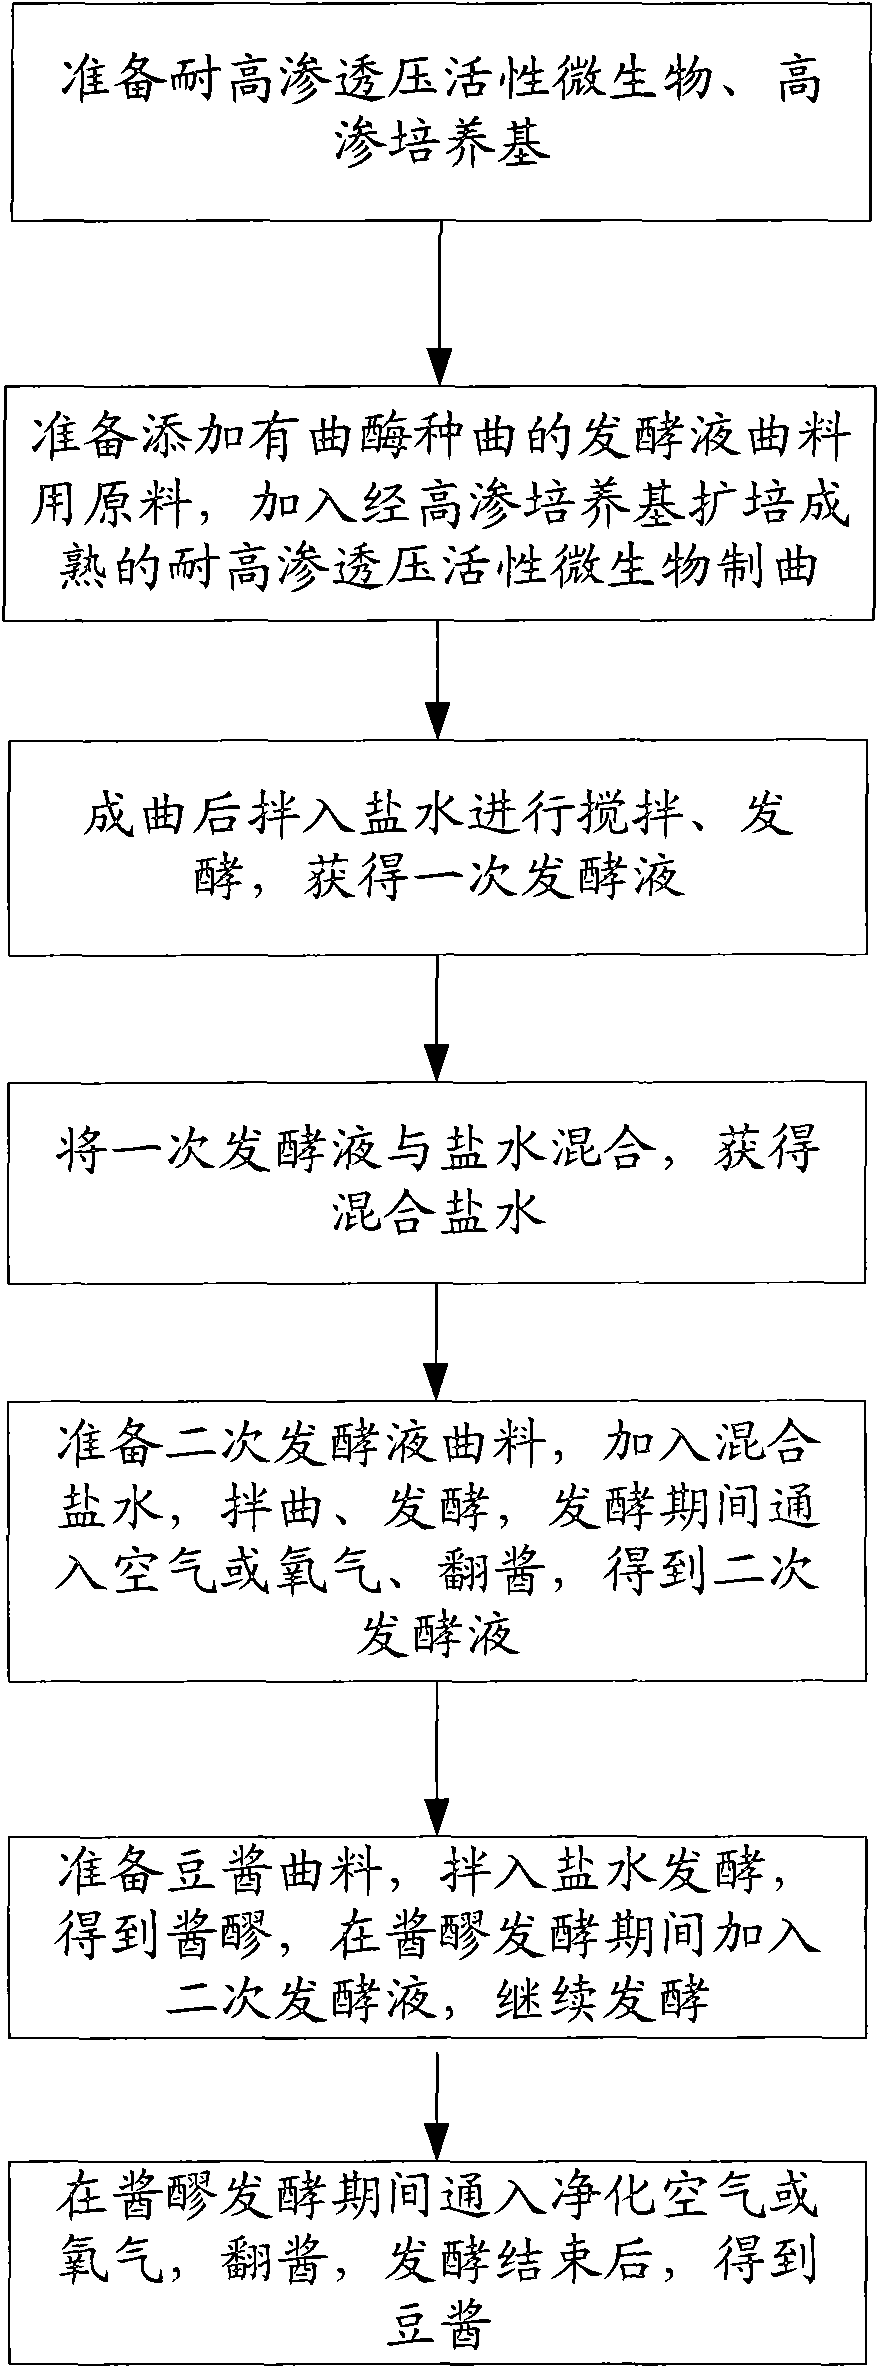 Fermentation method of soybean paste